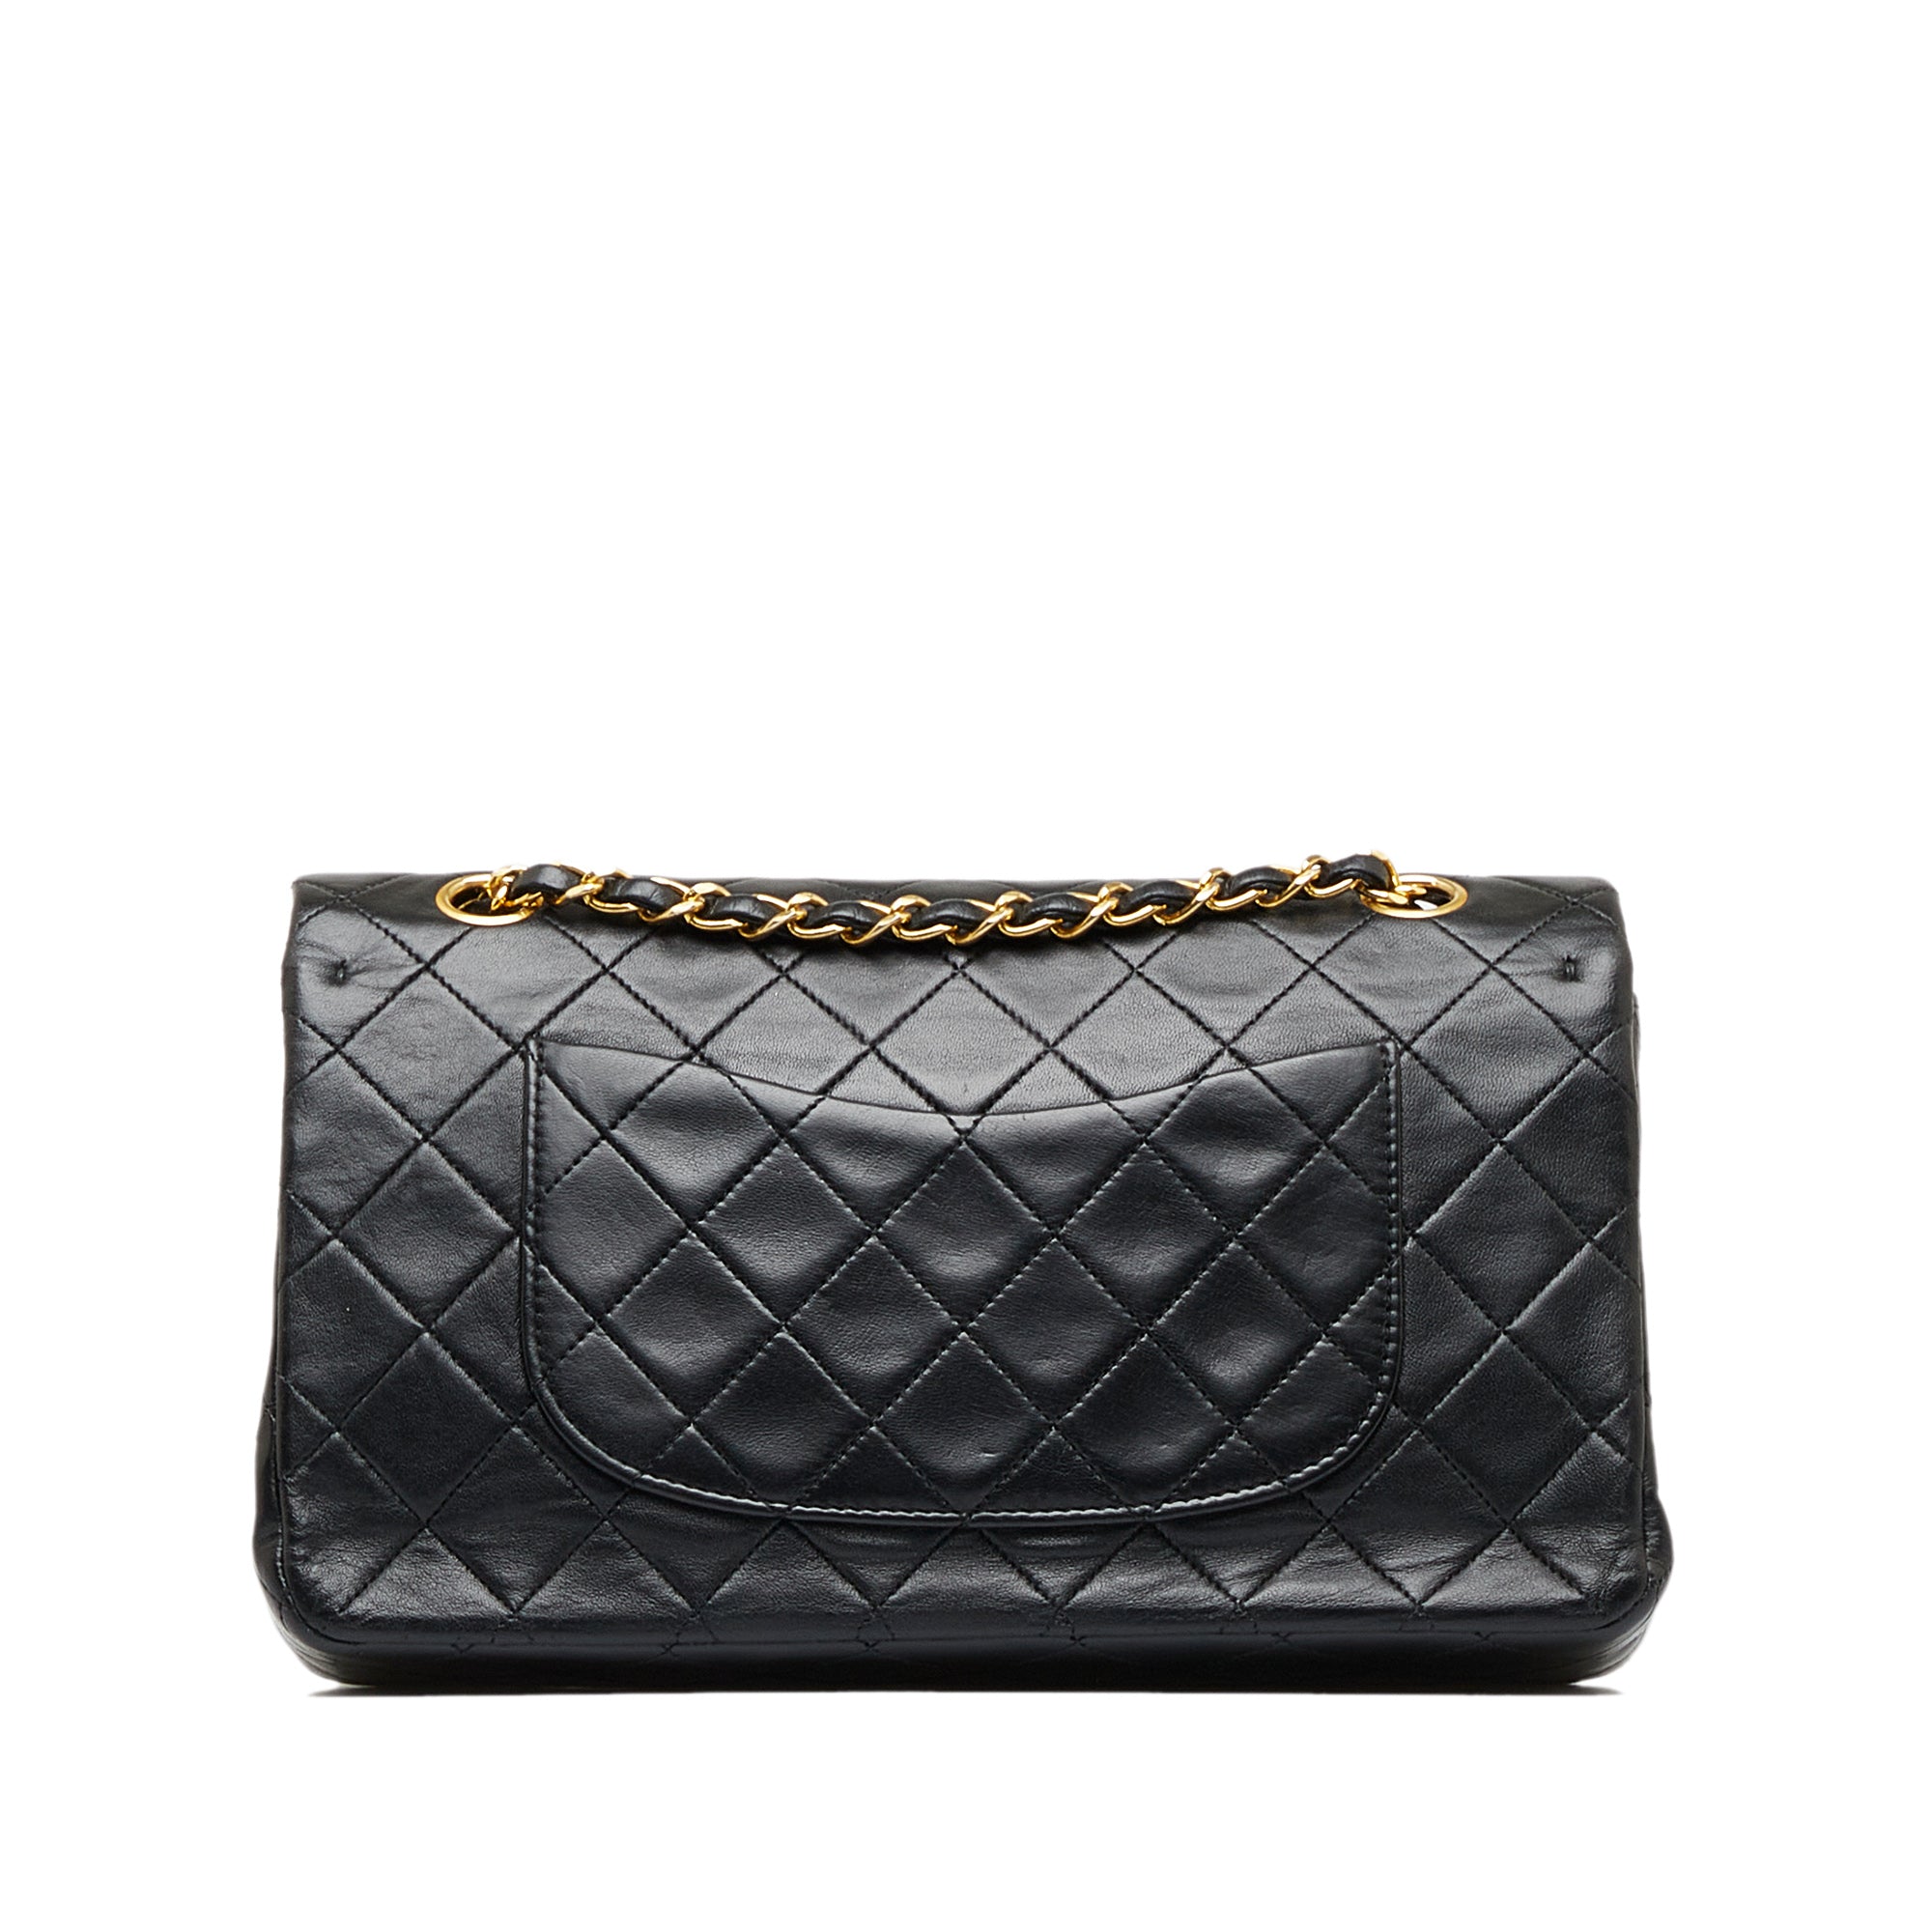 Chanel Vintage Classic Medium Black Double Flap Bag at Jill's Consignment